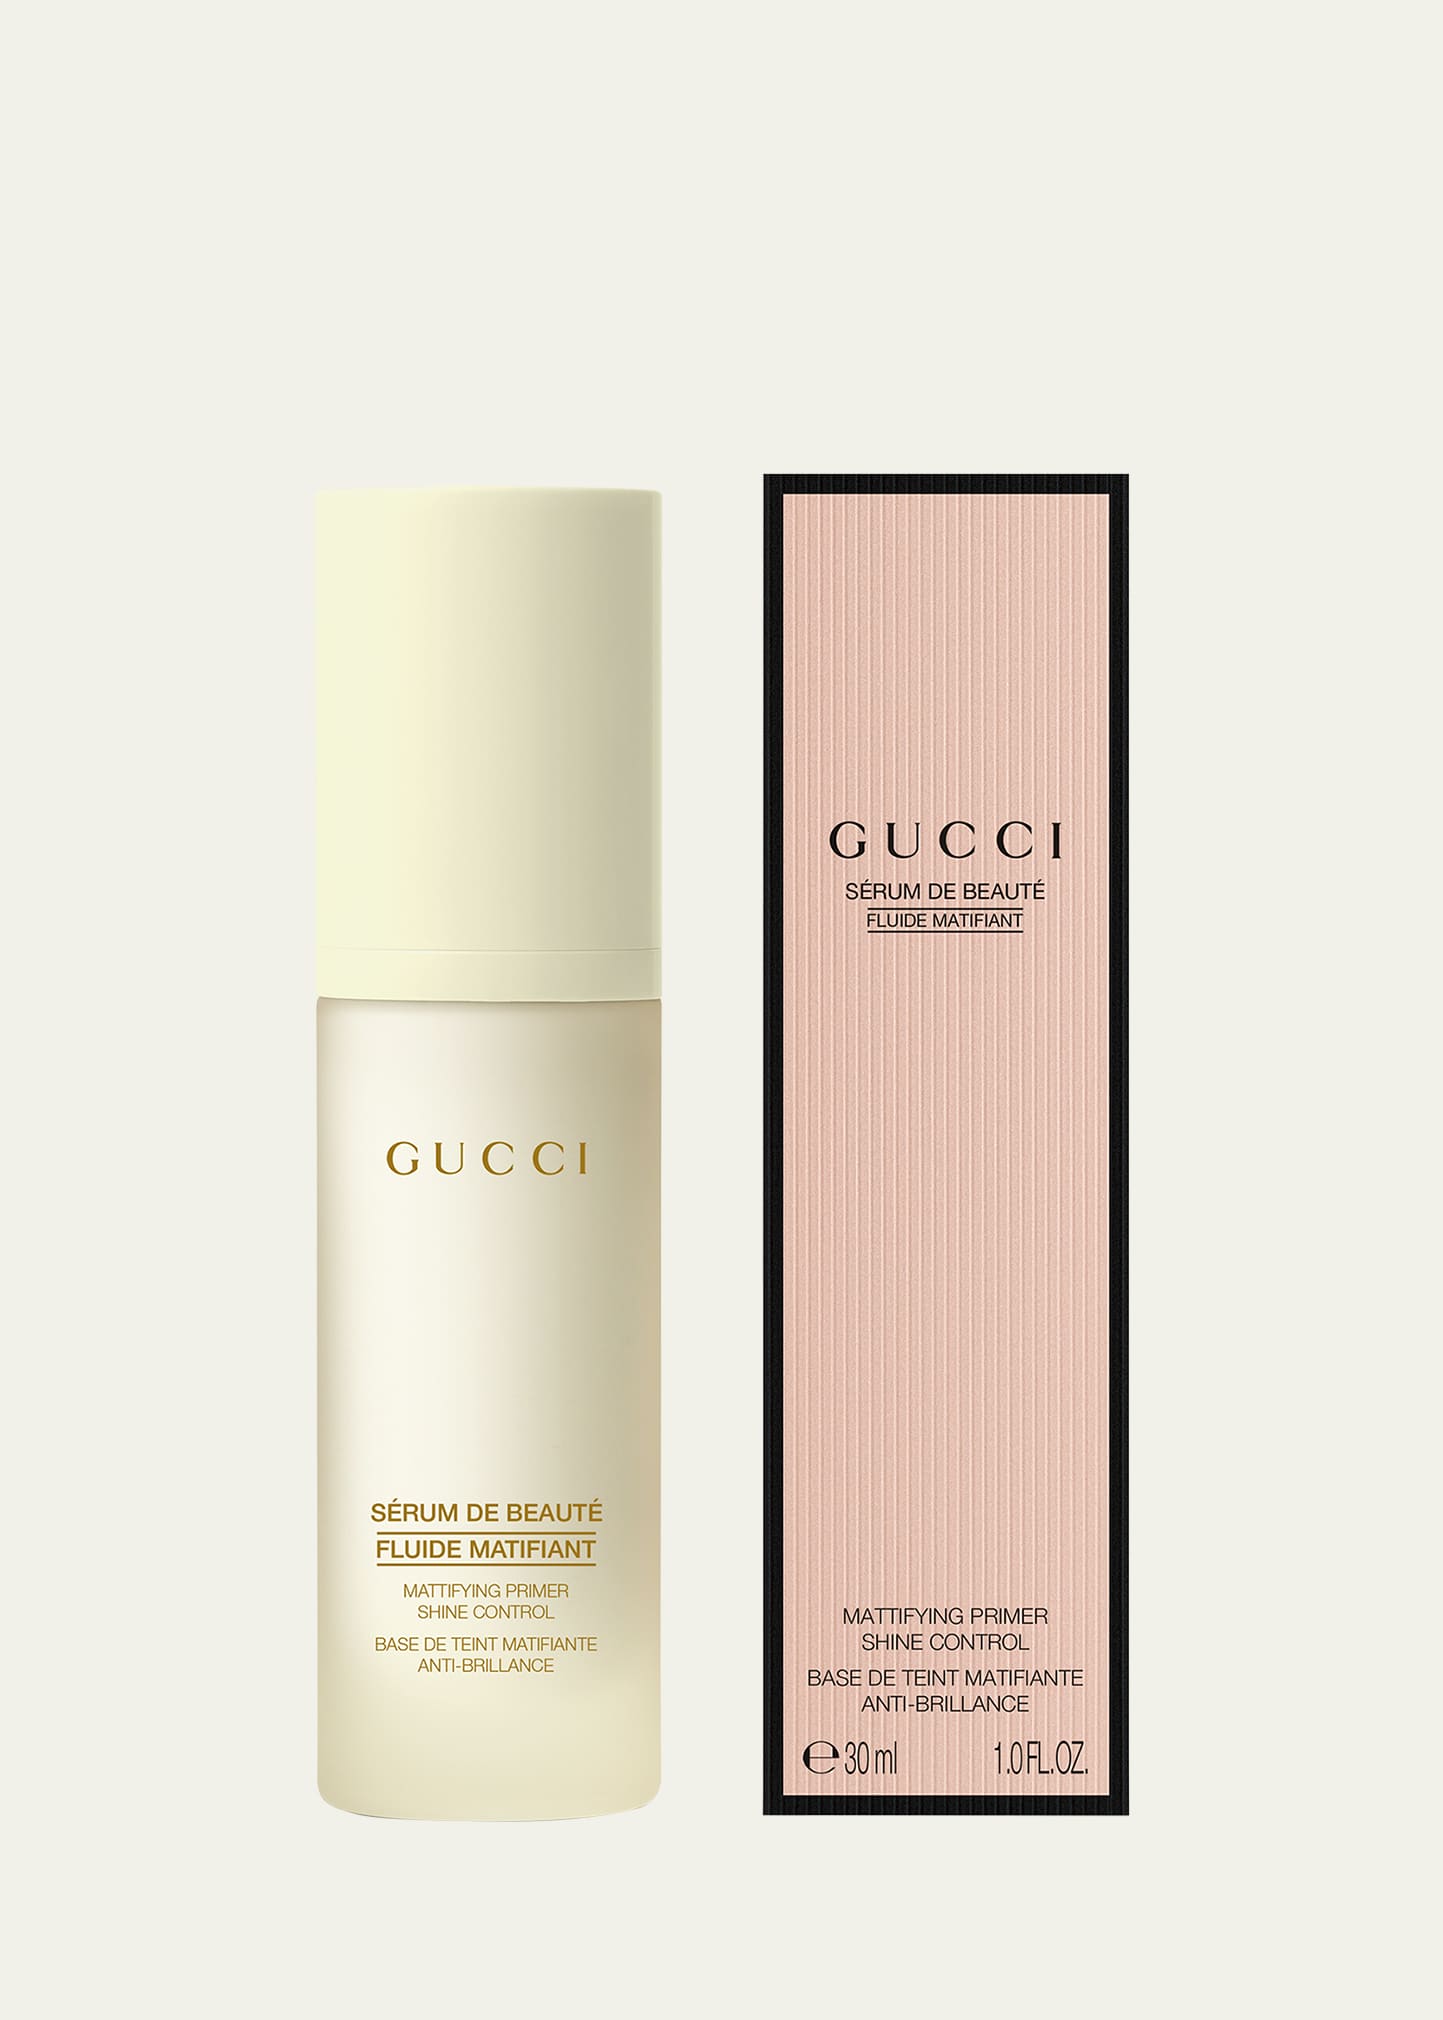 Gucci 1 oz. Serum de Beaute Mattifying Primer